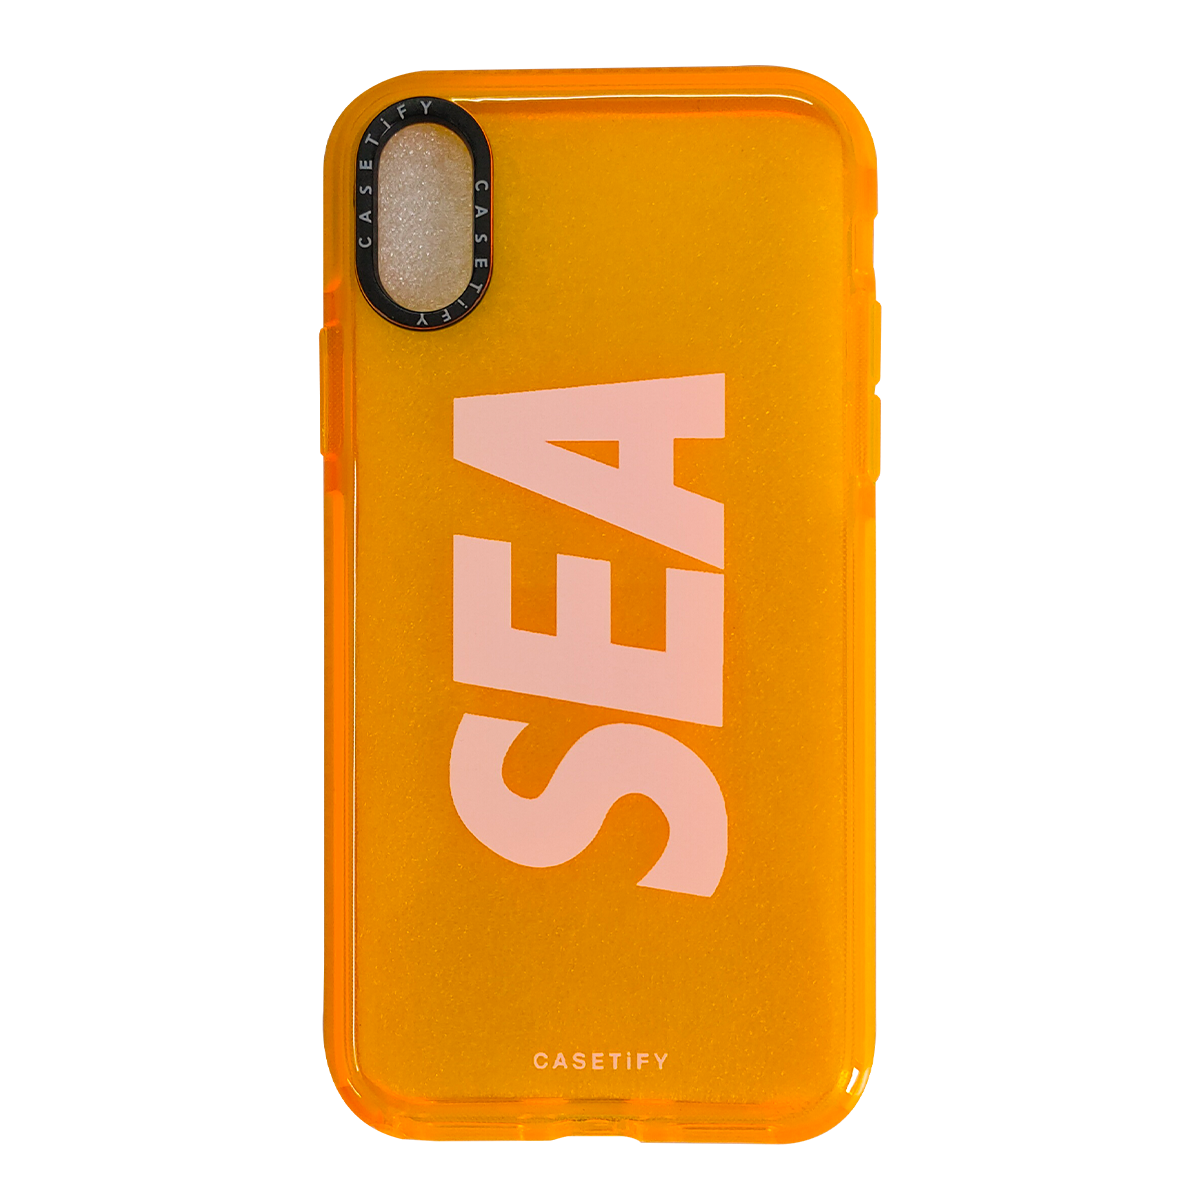 Casetify Sea Cases for iPhone XS MAX (Orange)